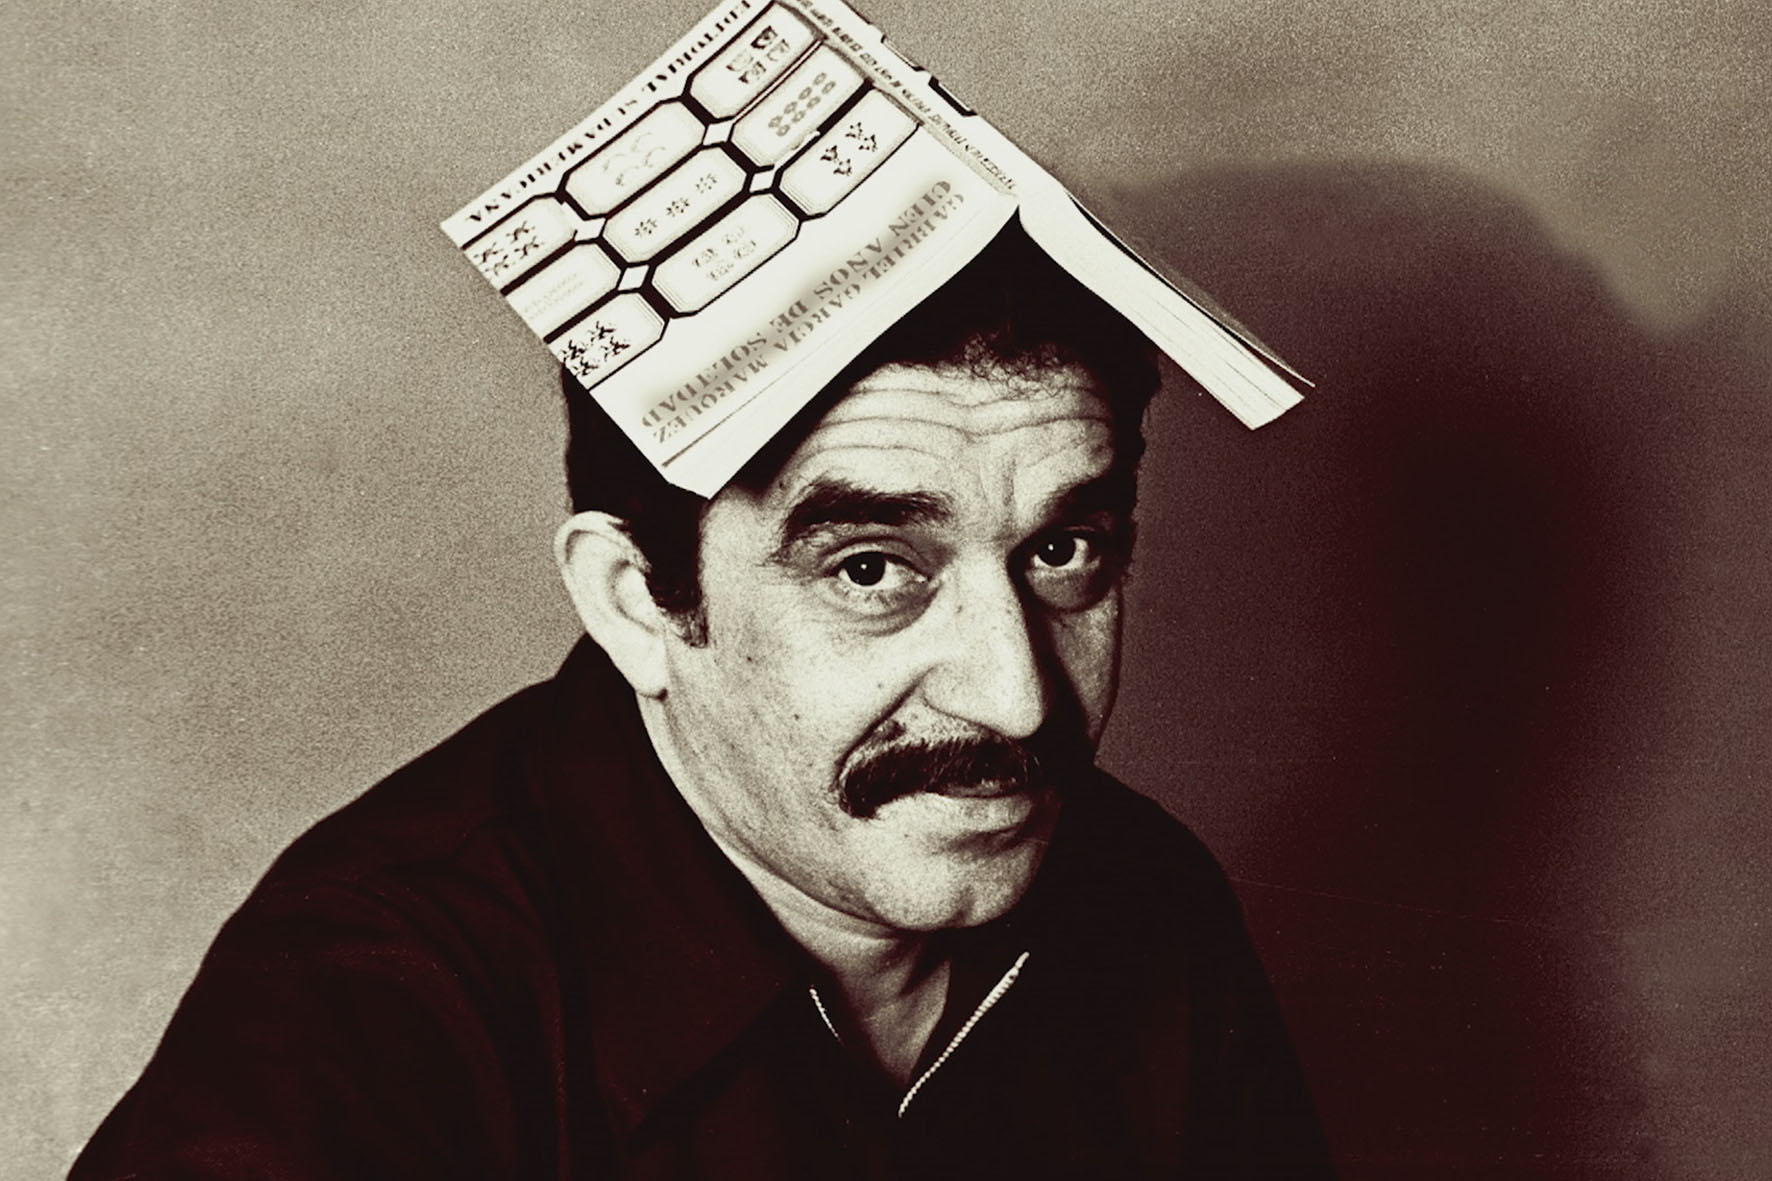 Gabo: The Creation of Gabriel García Márquez